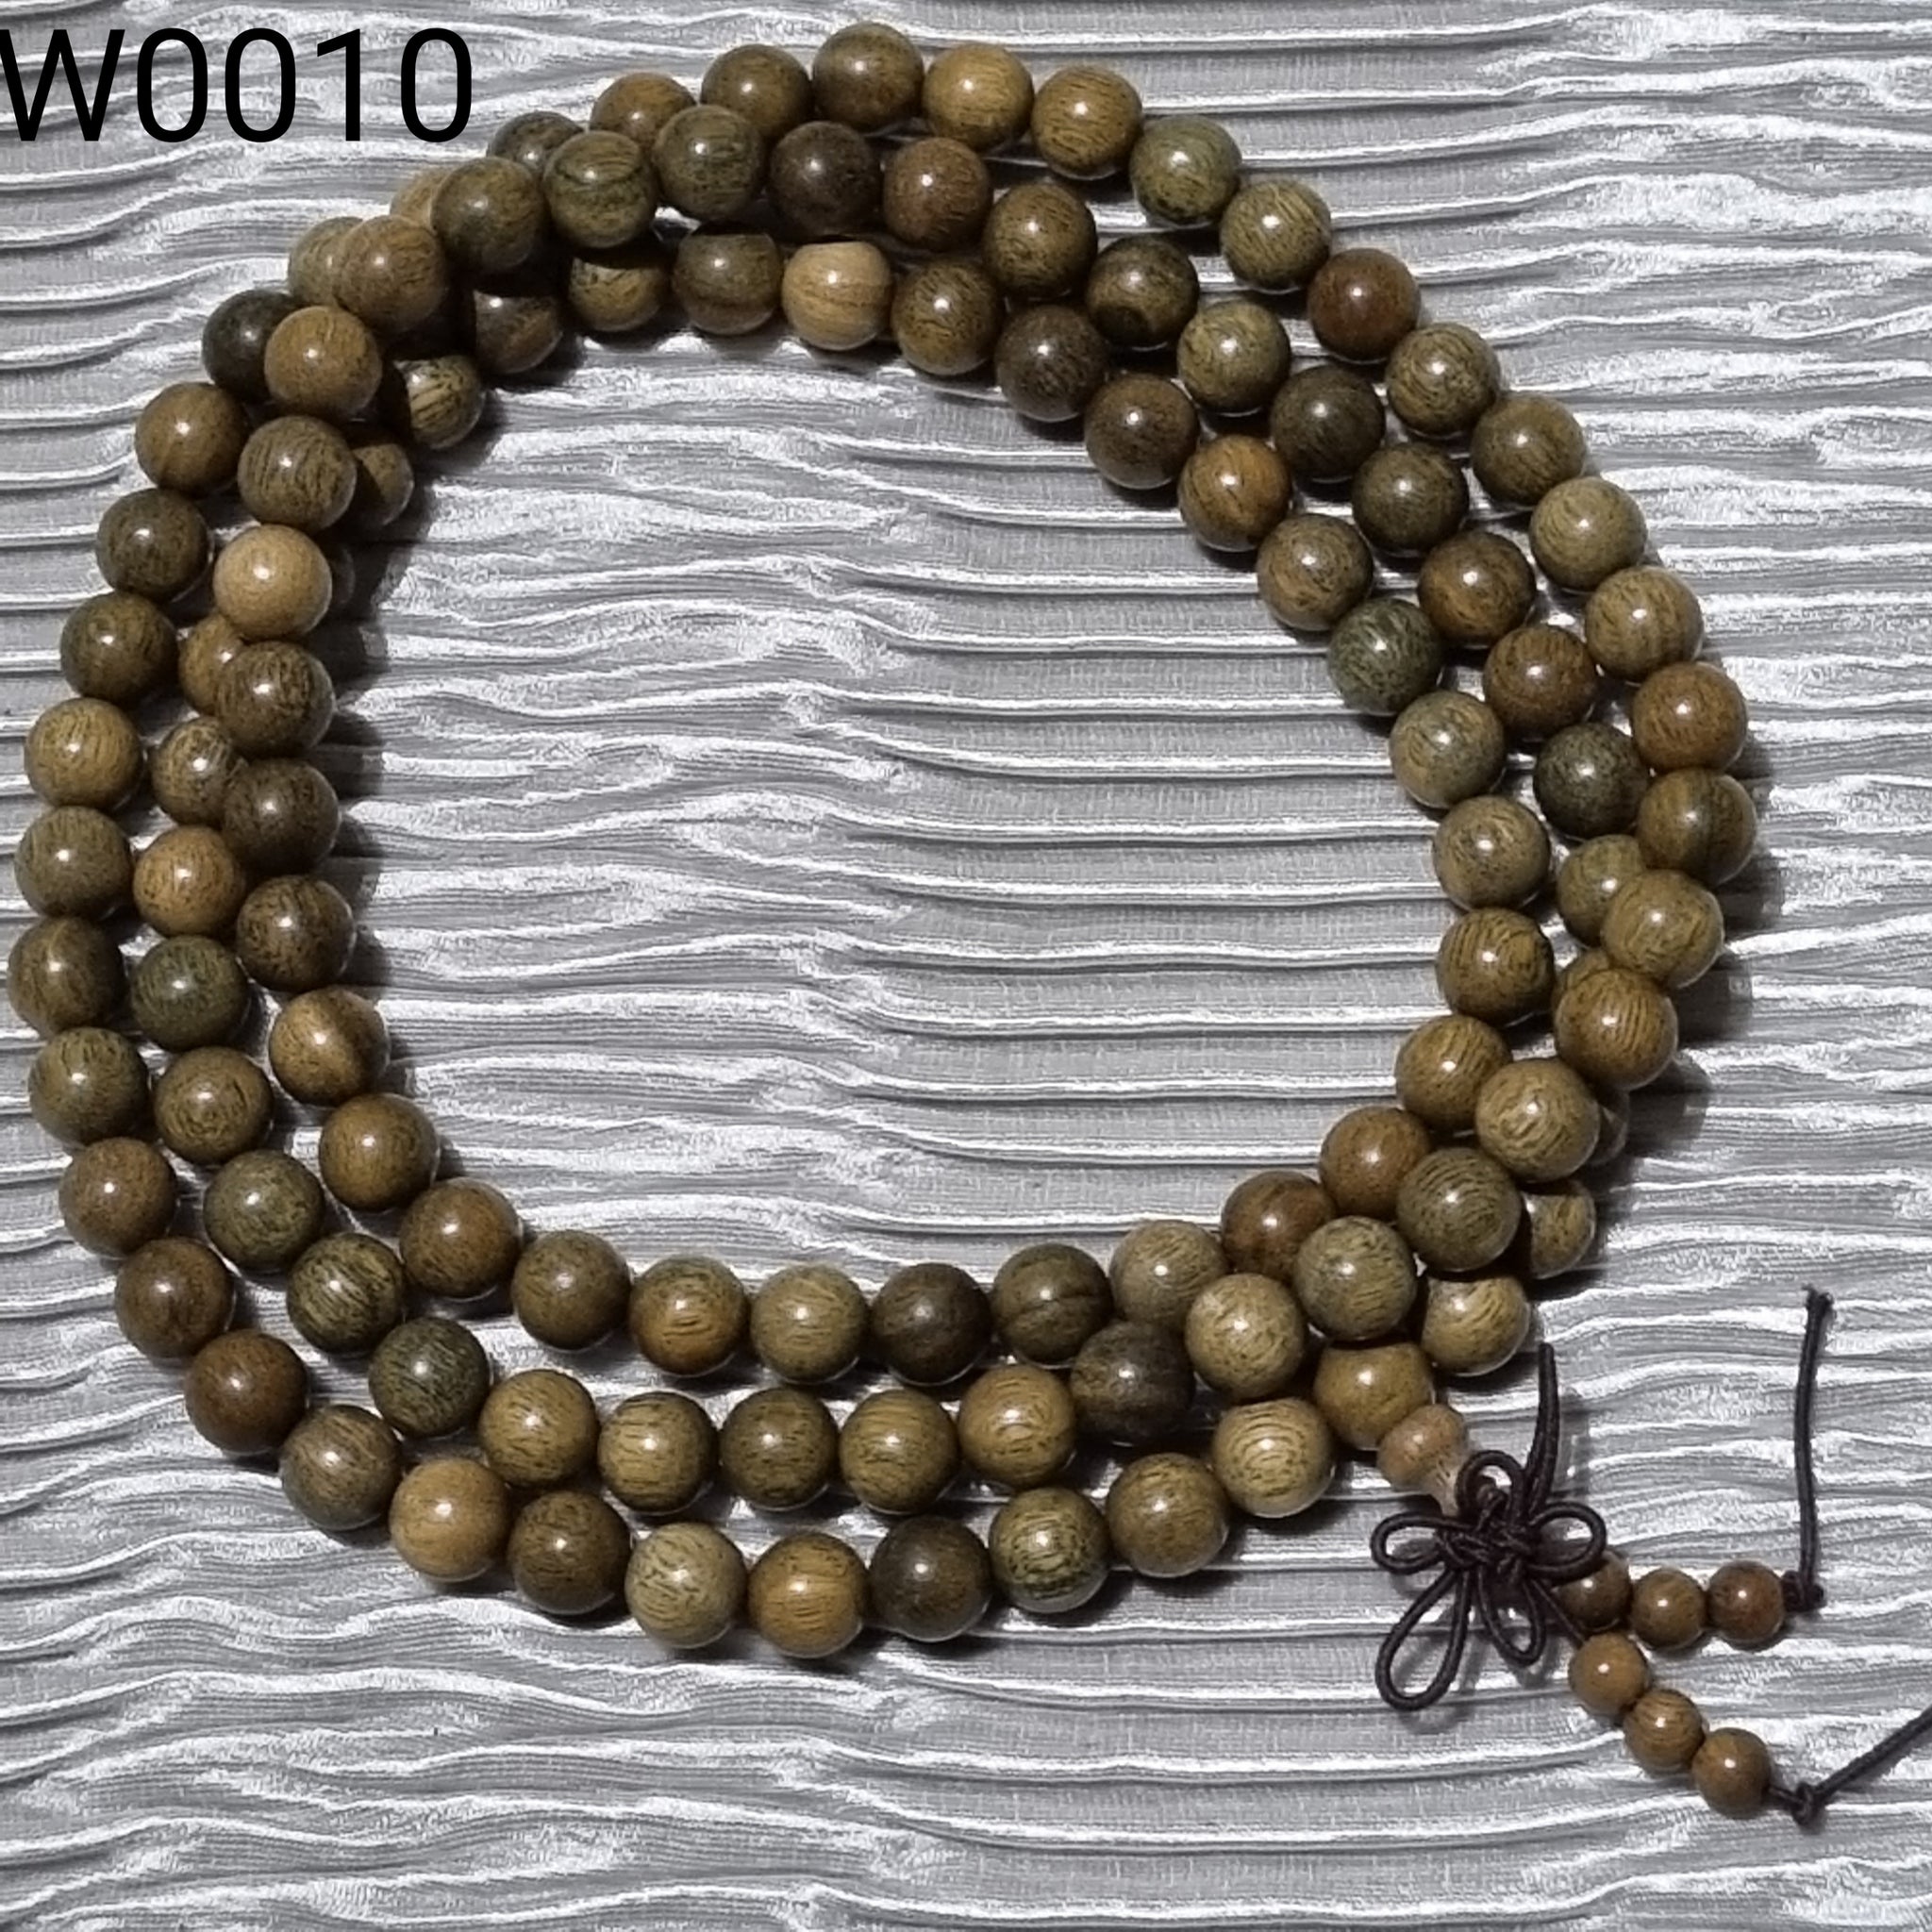 W0010 - Green Sandalwood Prayer Beads (青檀木佛珠) 8mm